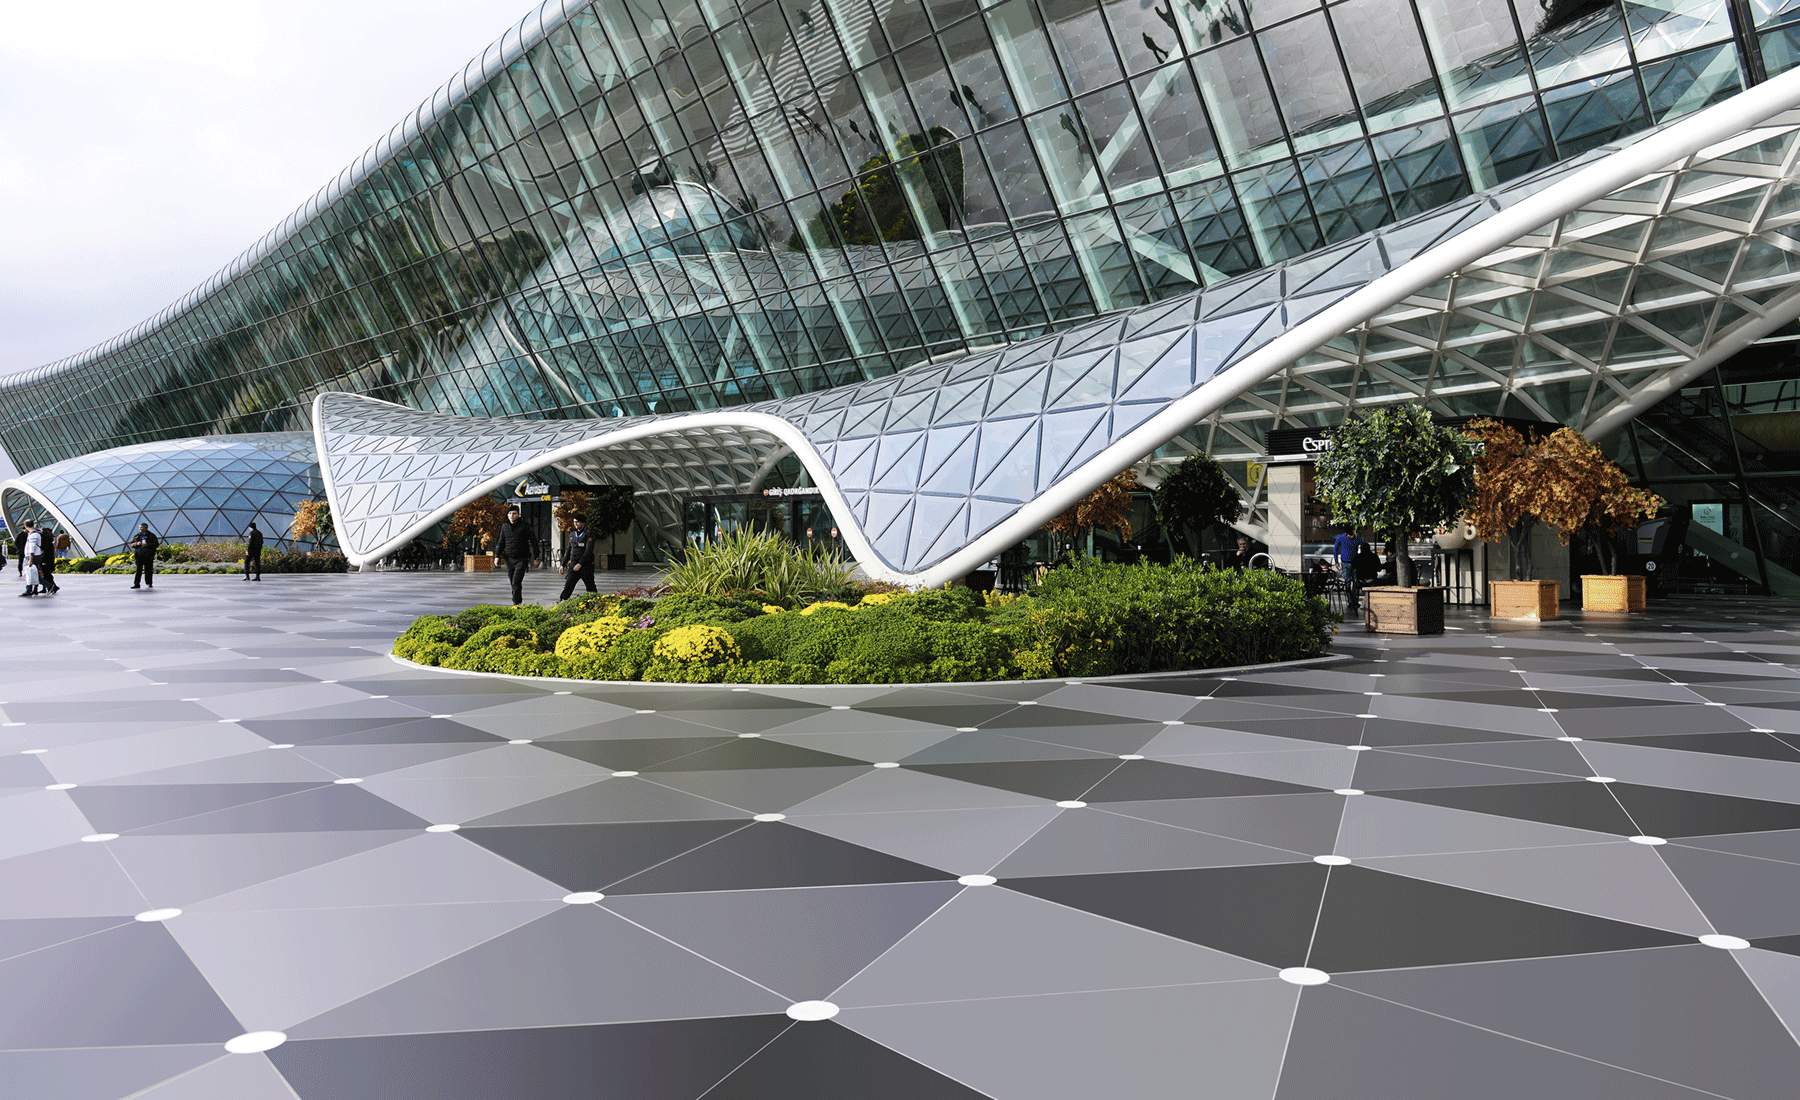 Flughafen Baku